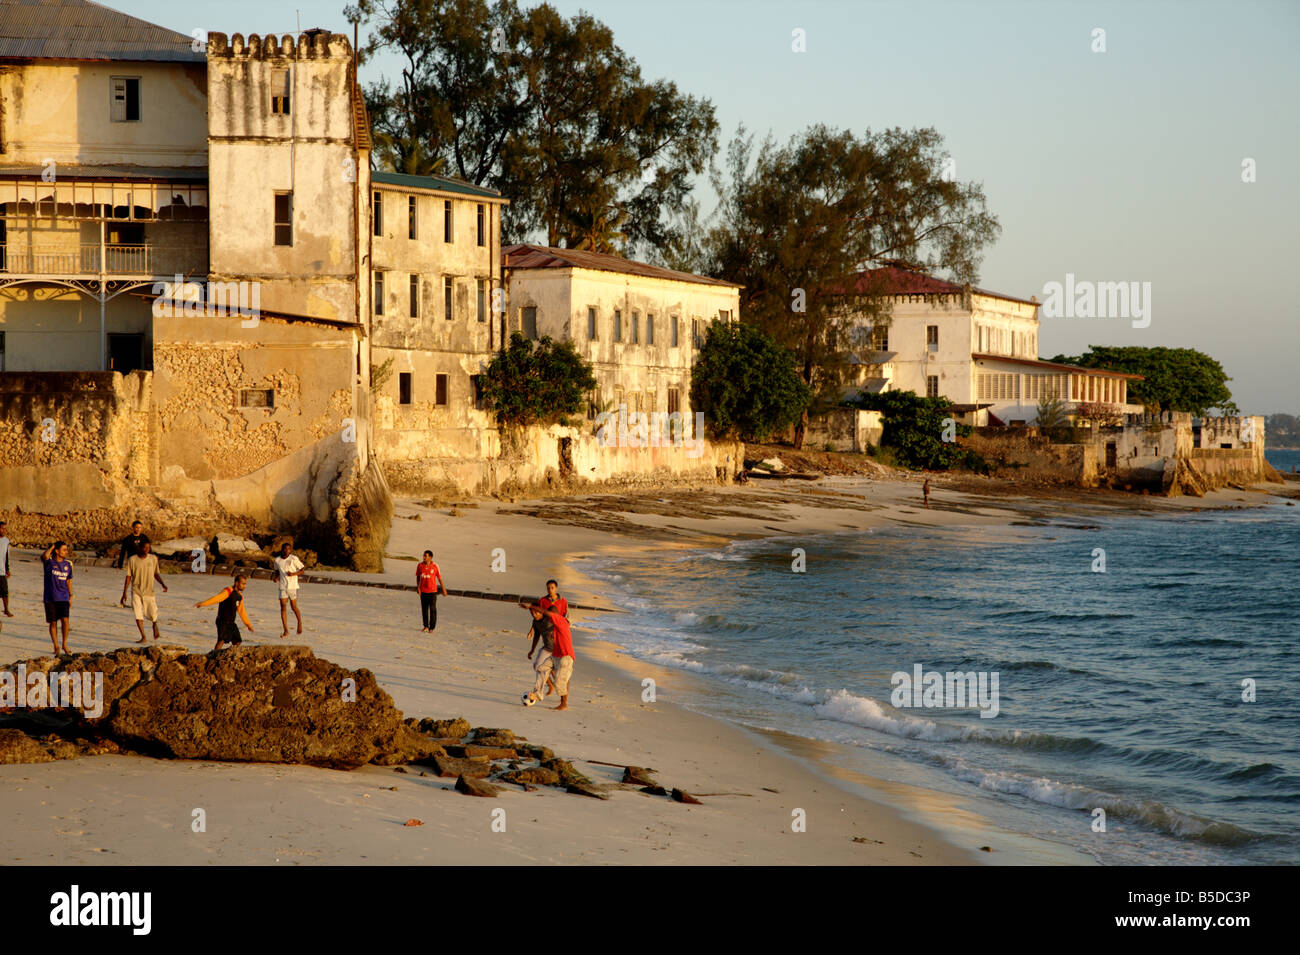 Football on the beach in Stone Town - Zanzibar Stock Photo